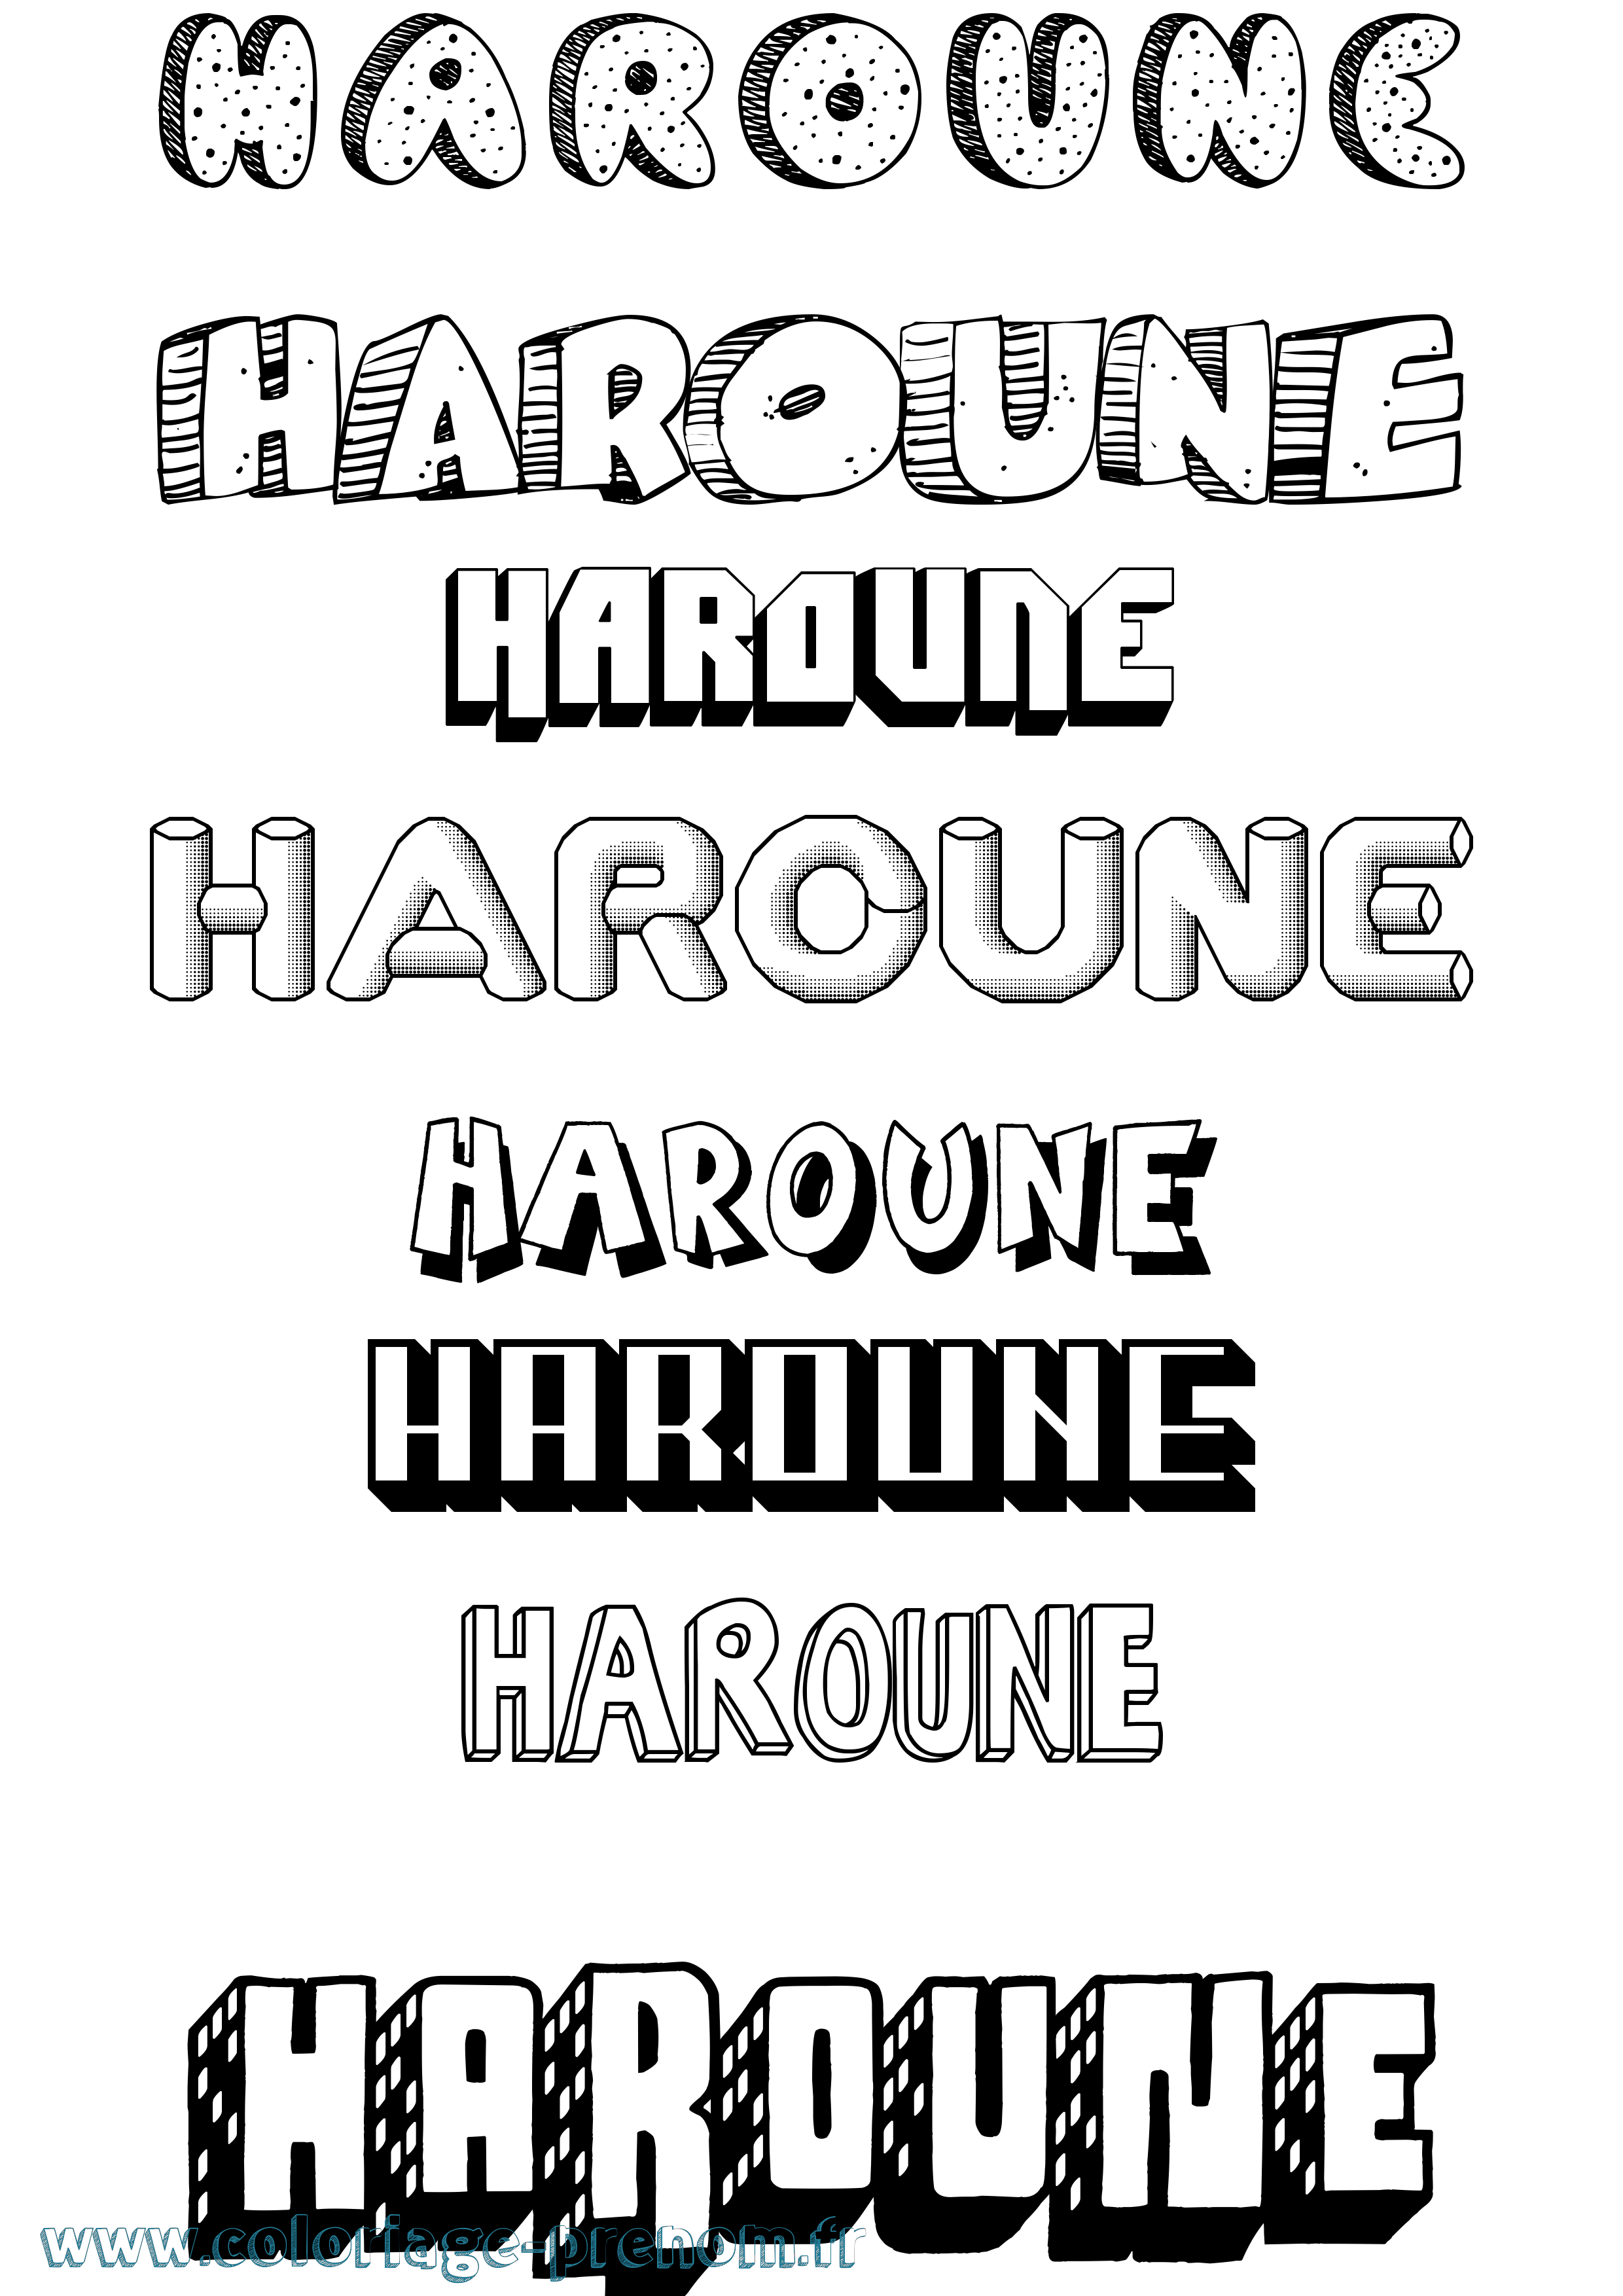 Coloriage prénom Haroune